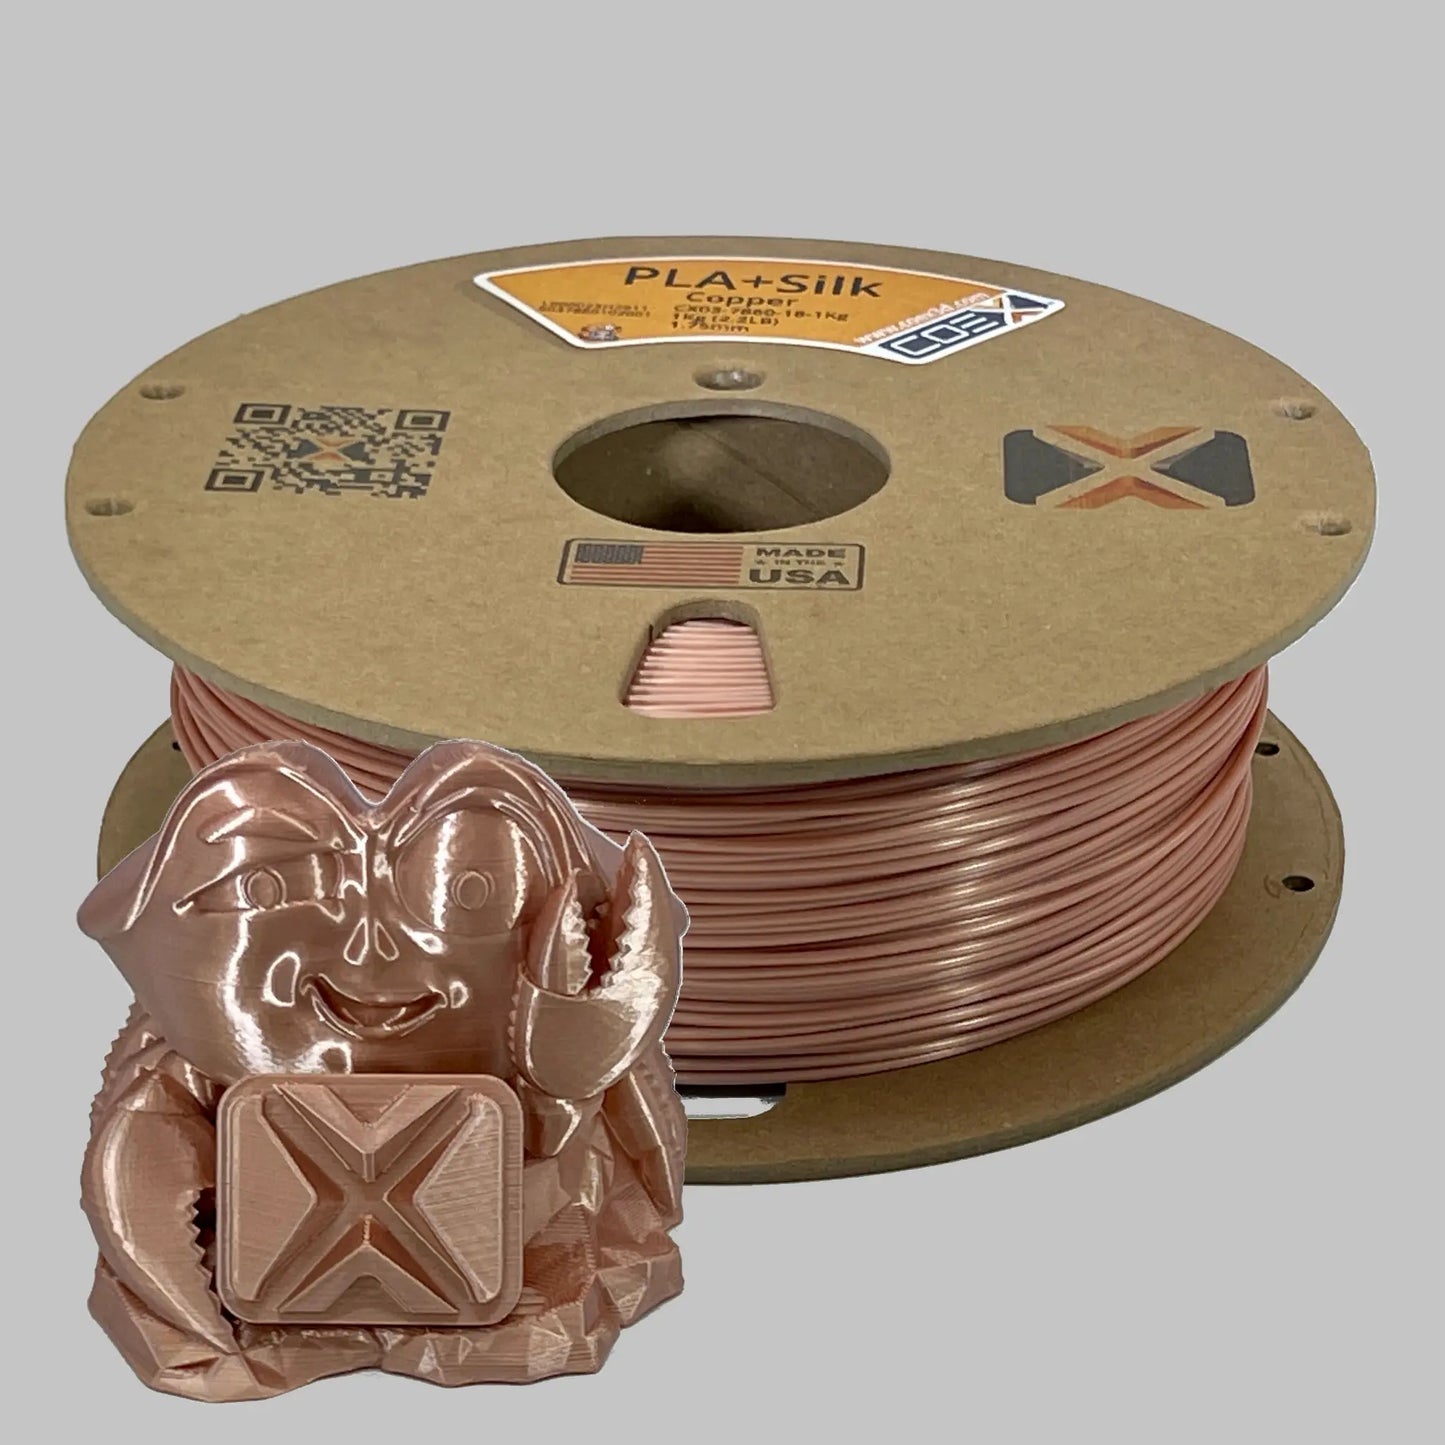 Copper PLA+Silk coex3d